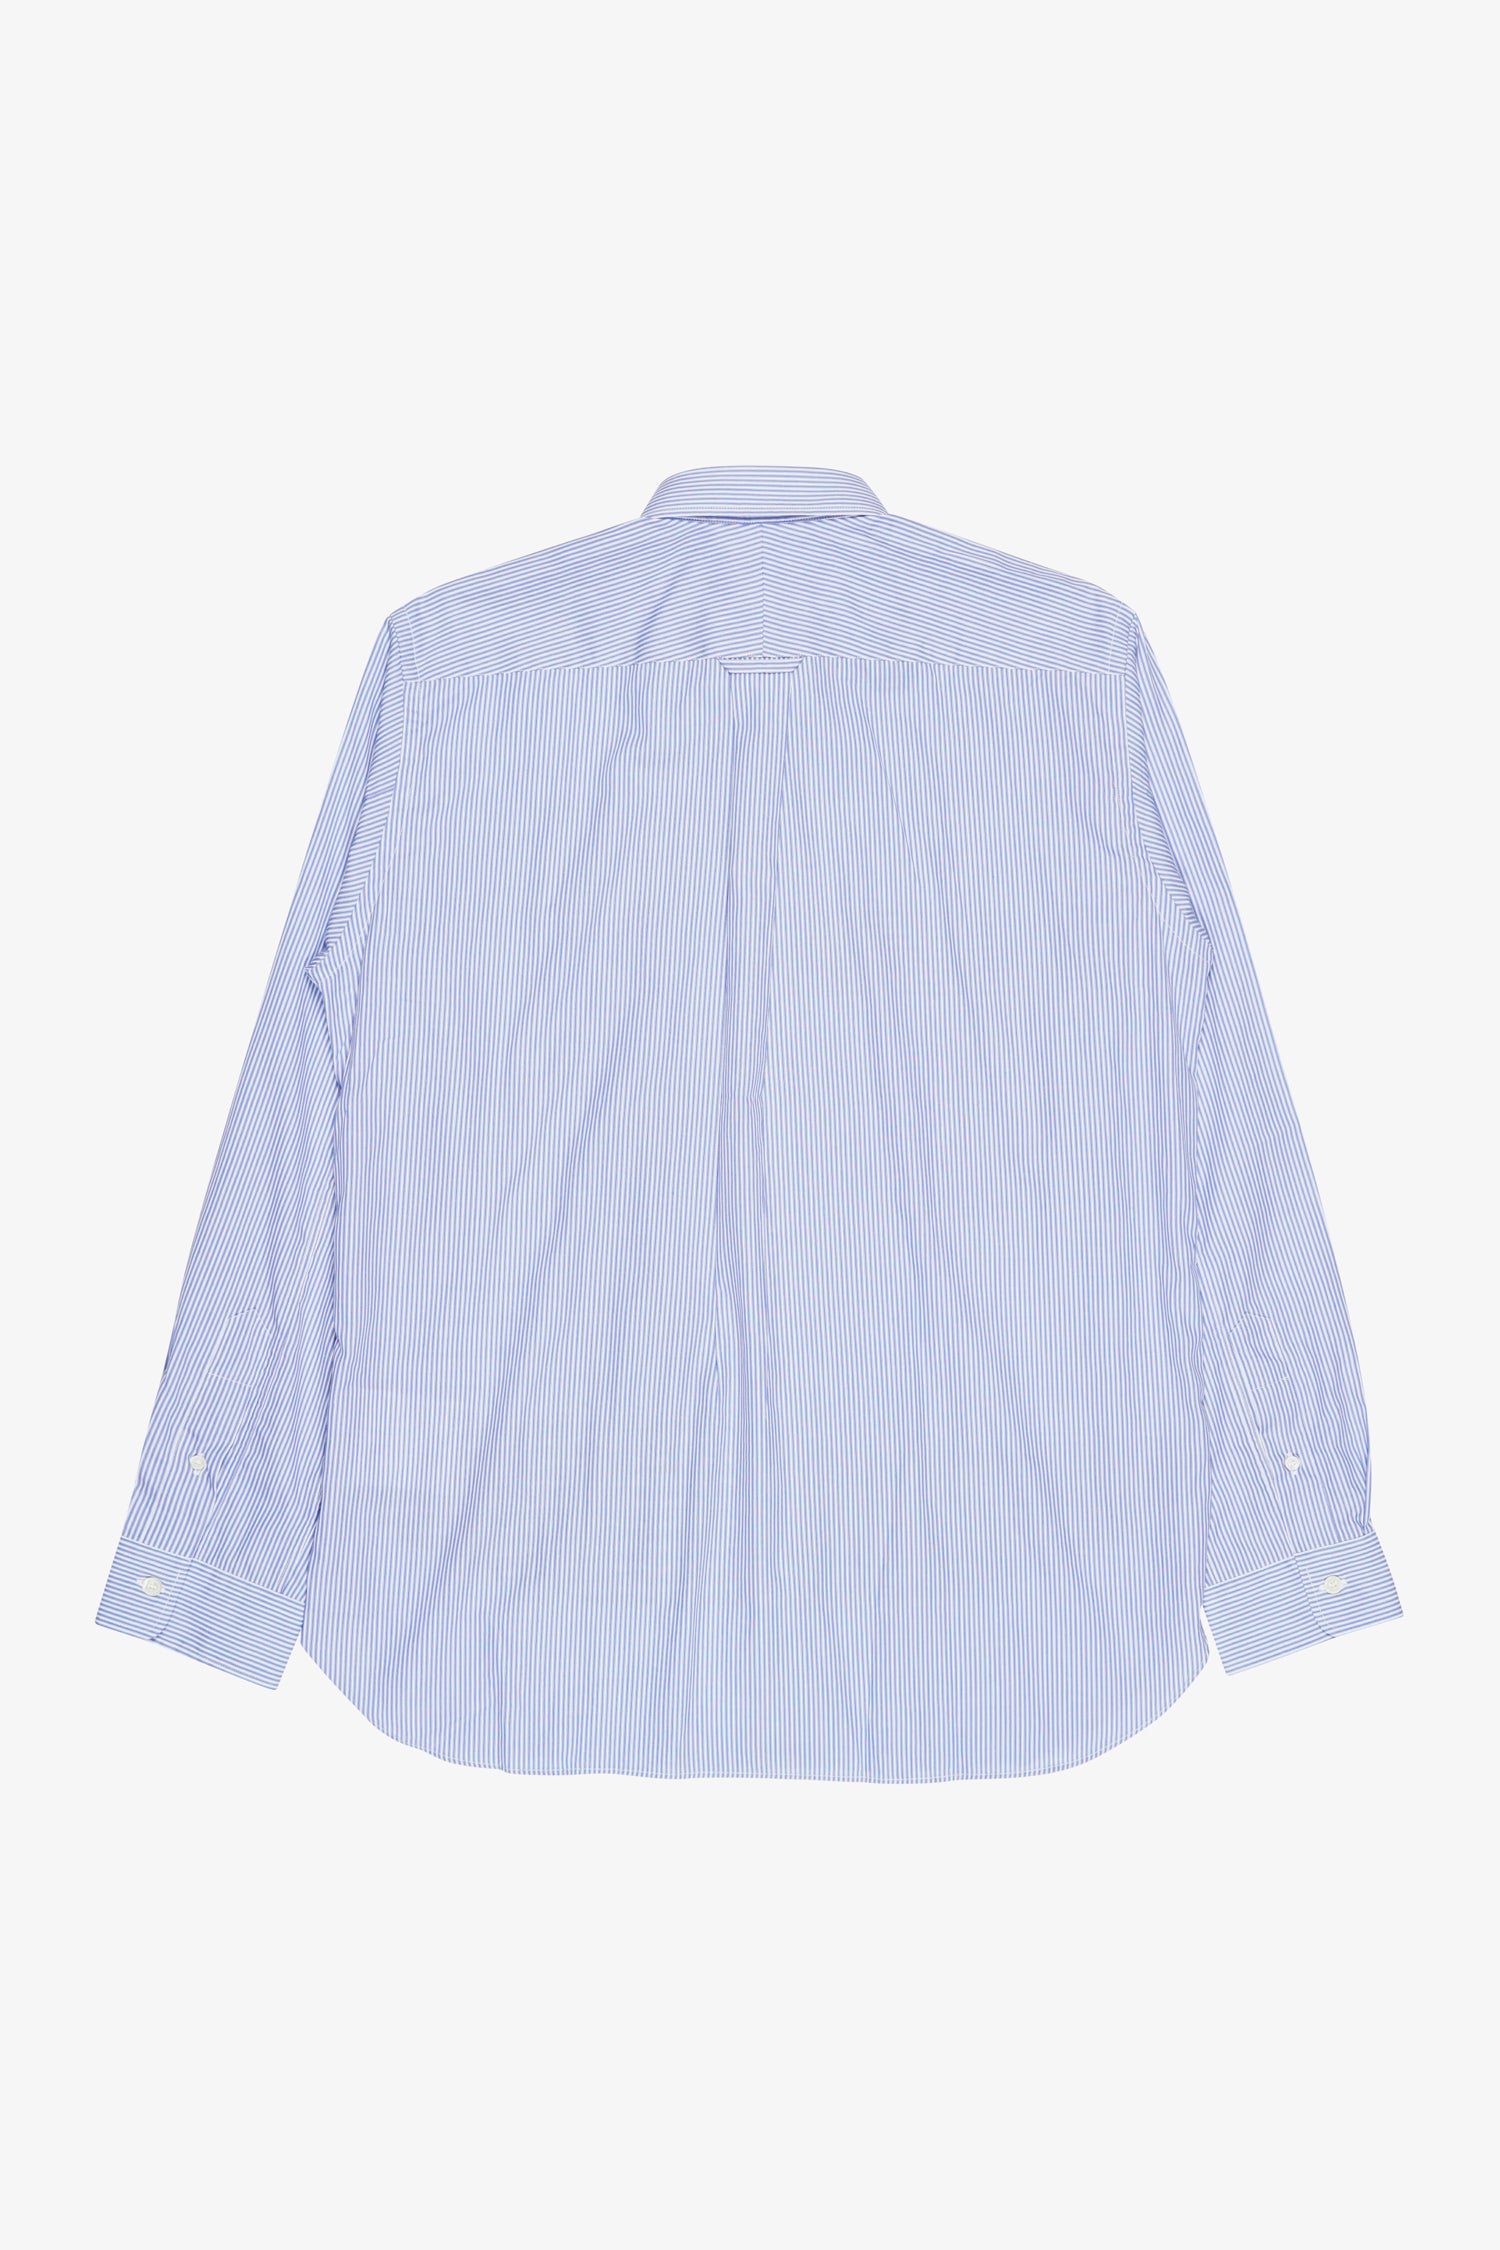 Selectshop FRAME - JUNYA WATANABE MAN Patchwork Oxford Shirt Shirts Dubai